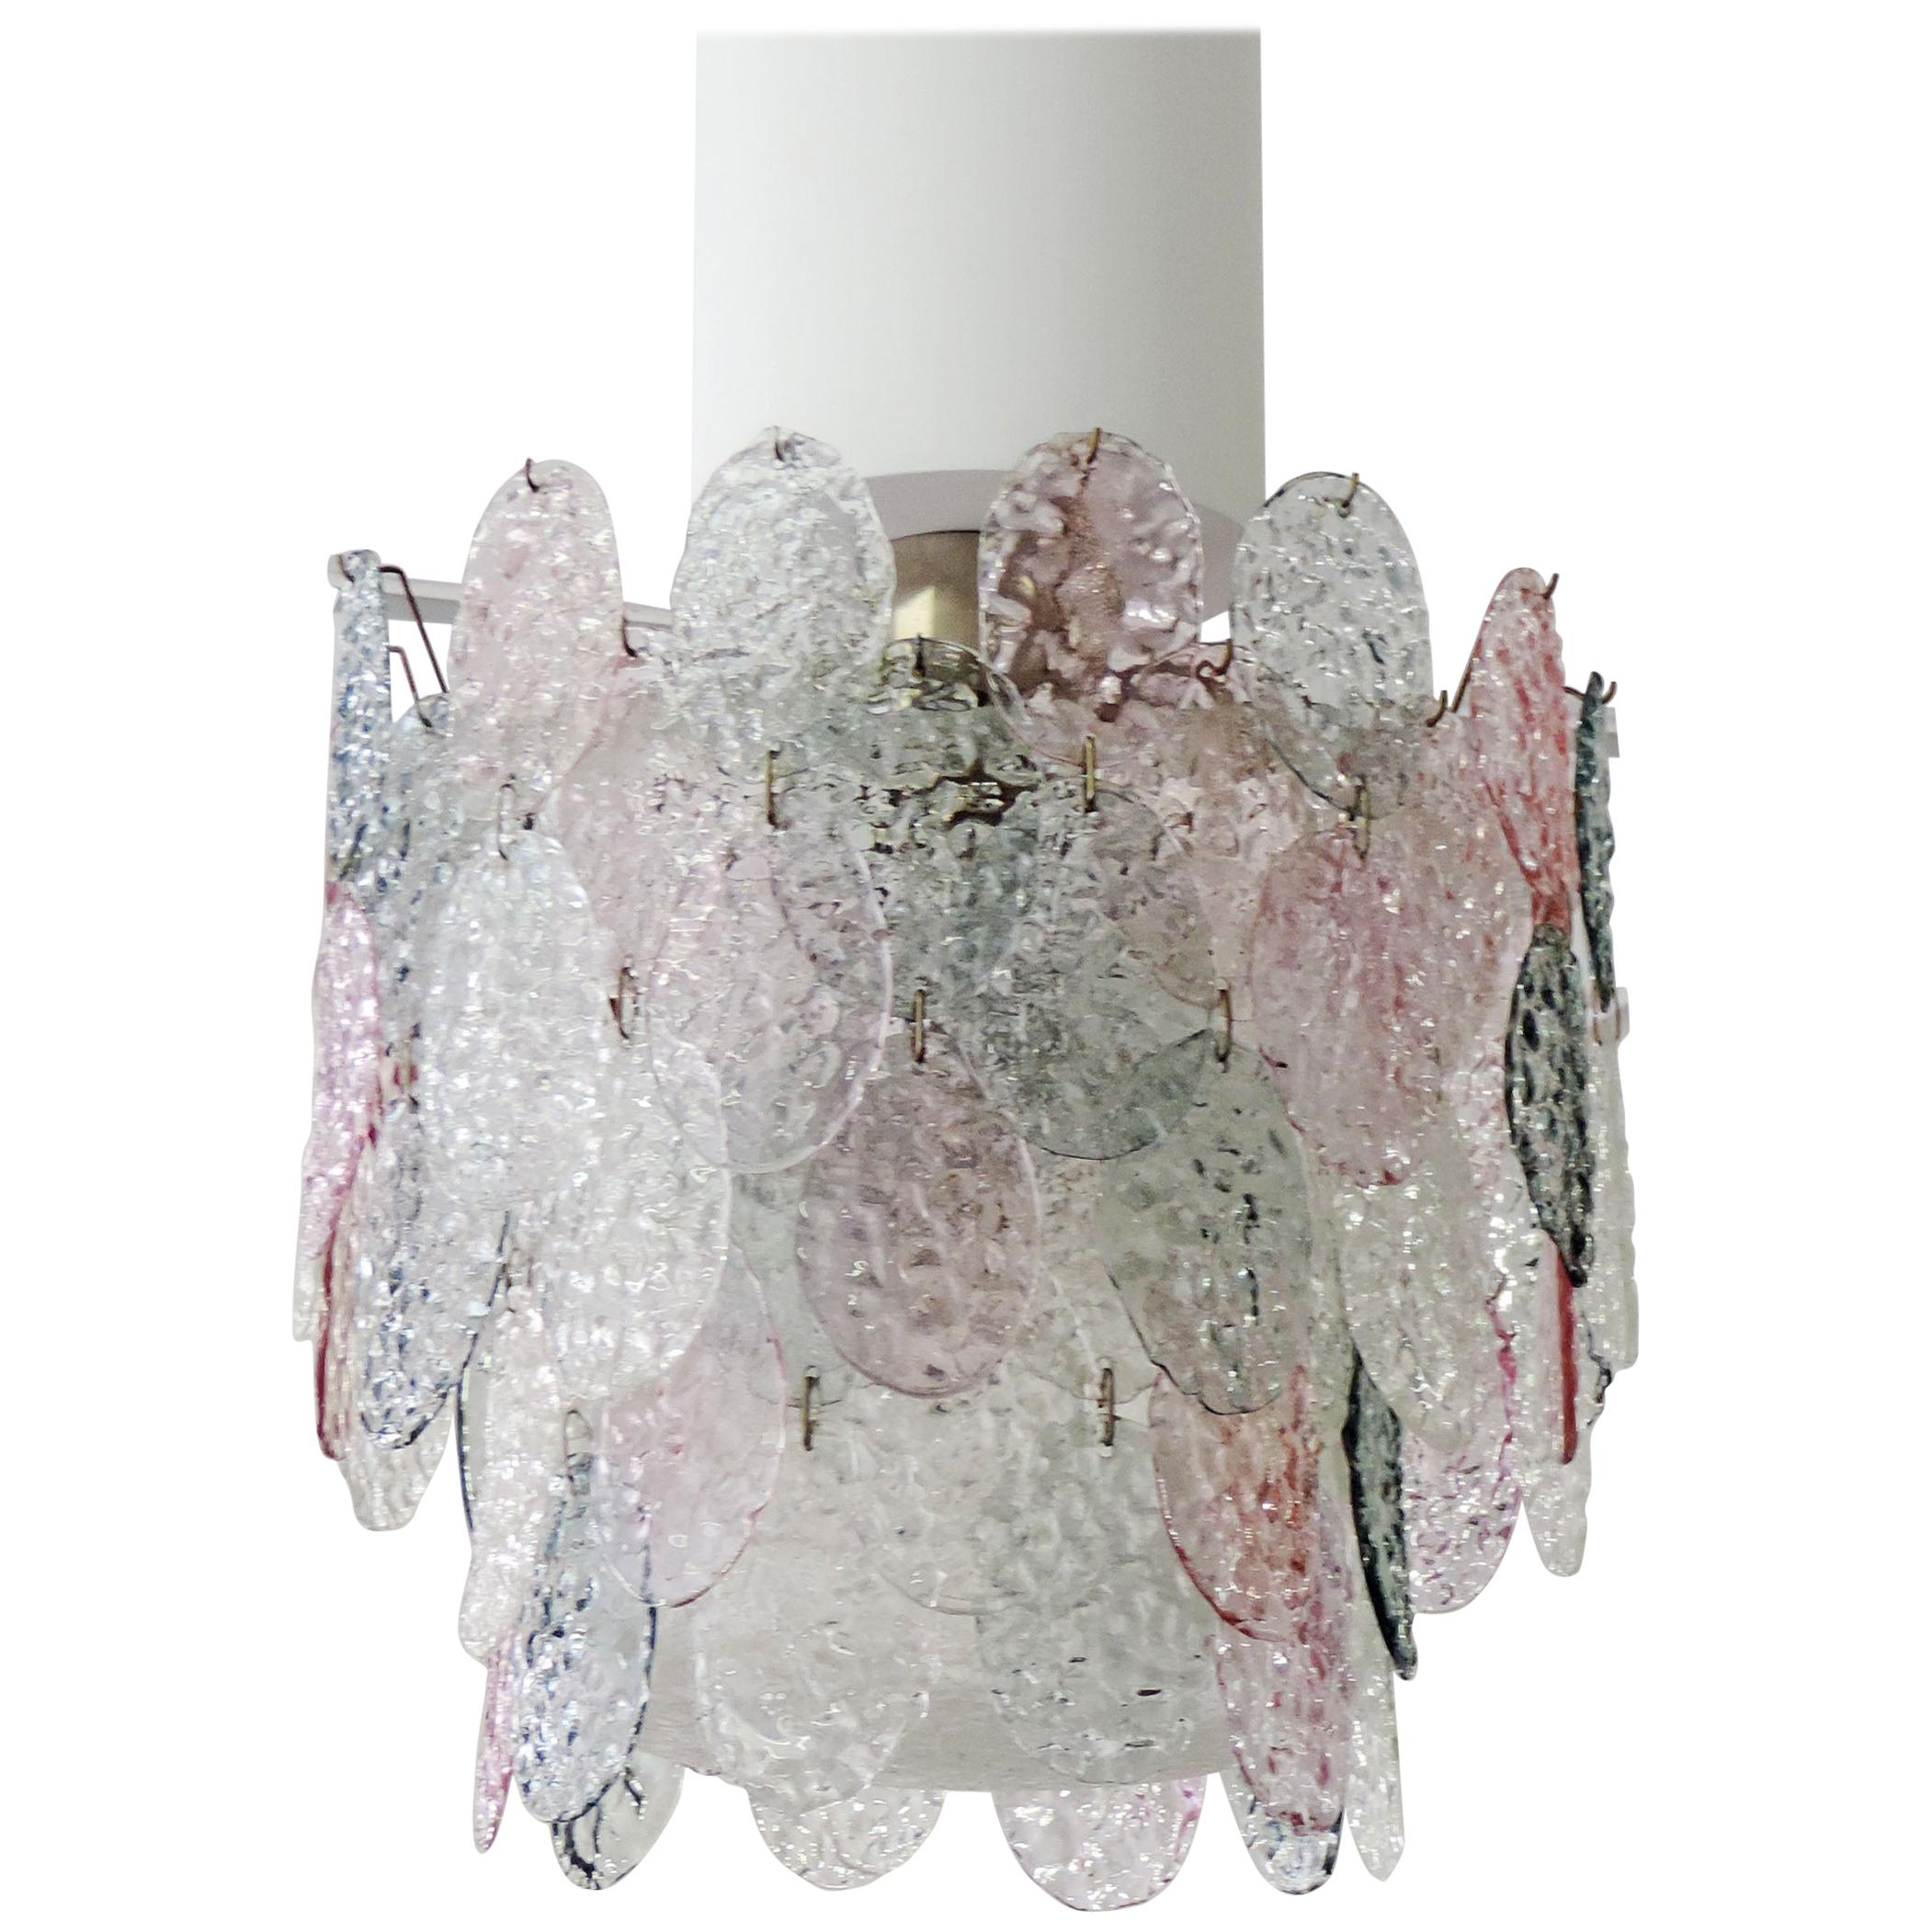 Gino Vistosi Murano Glass Ceiling Lamp for Vistosi, Italy, 1966 For Sale